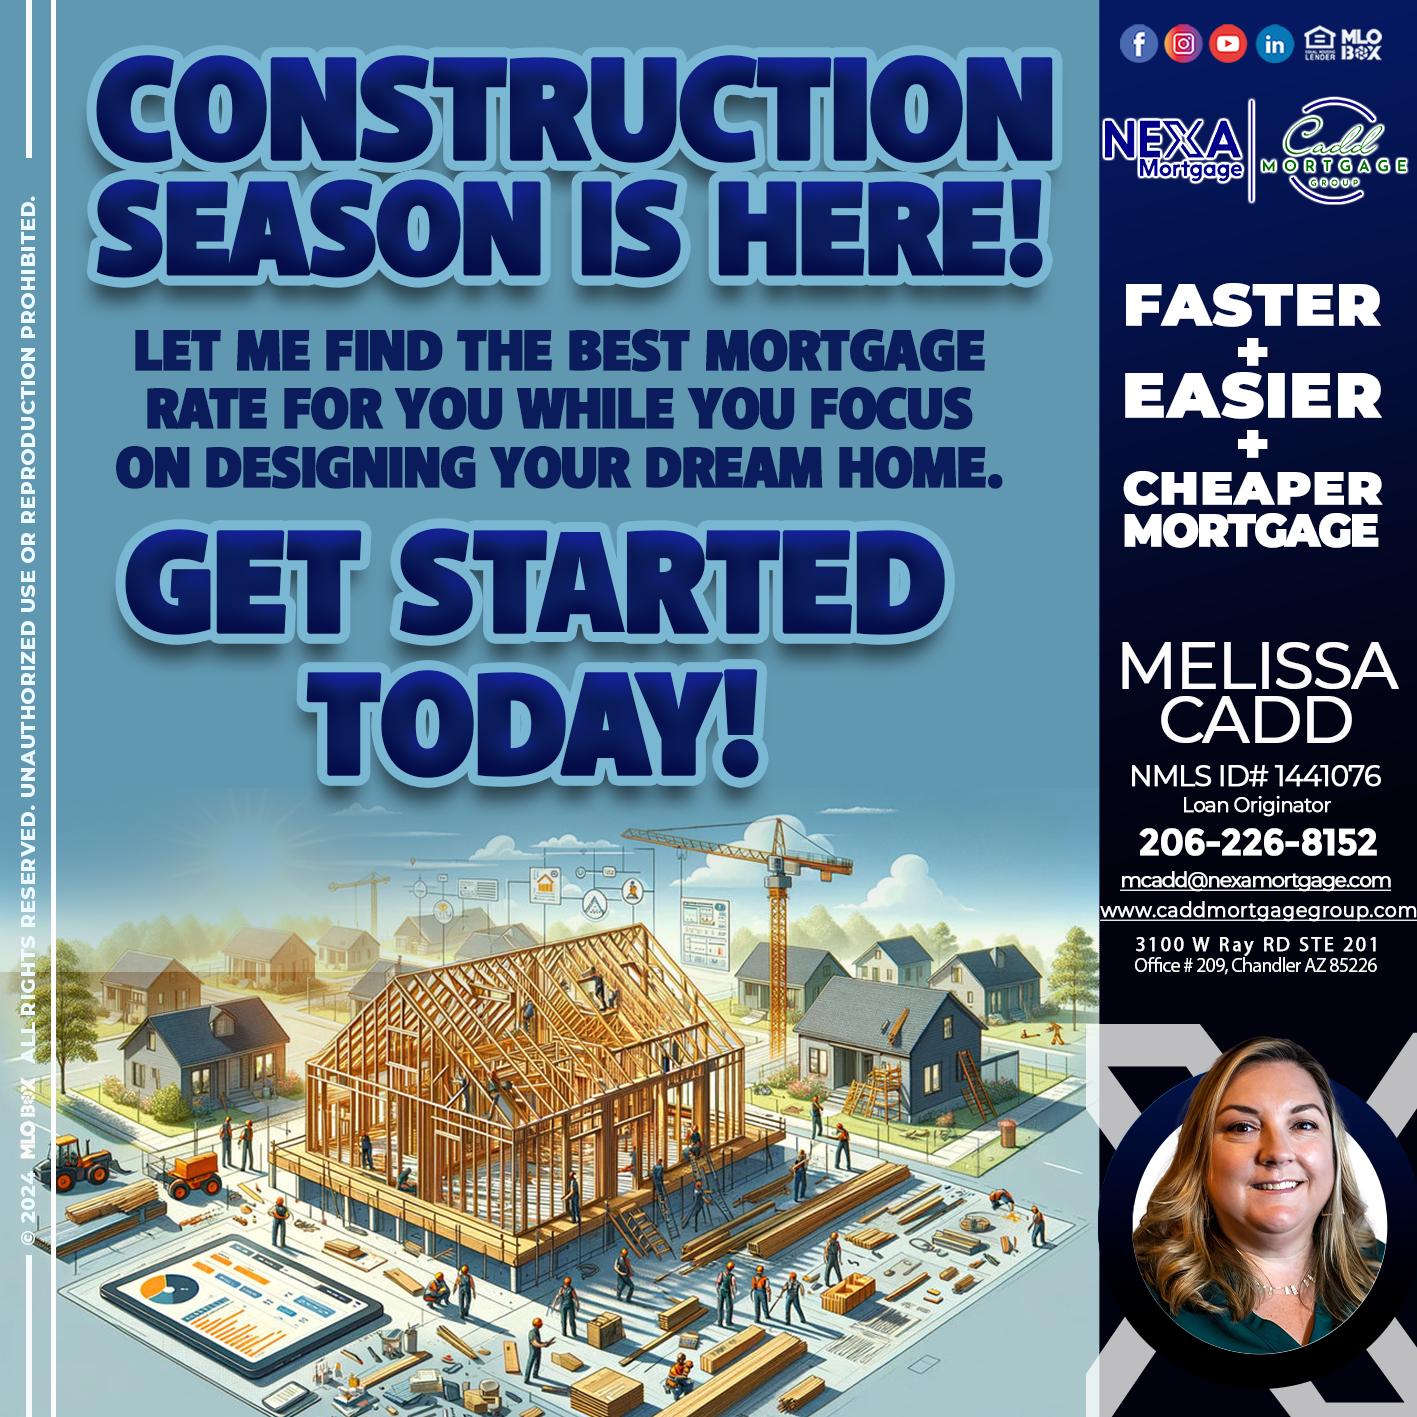 CONSTRUCTION - Melissa Cadd -Loan Originator